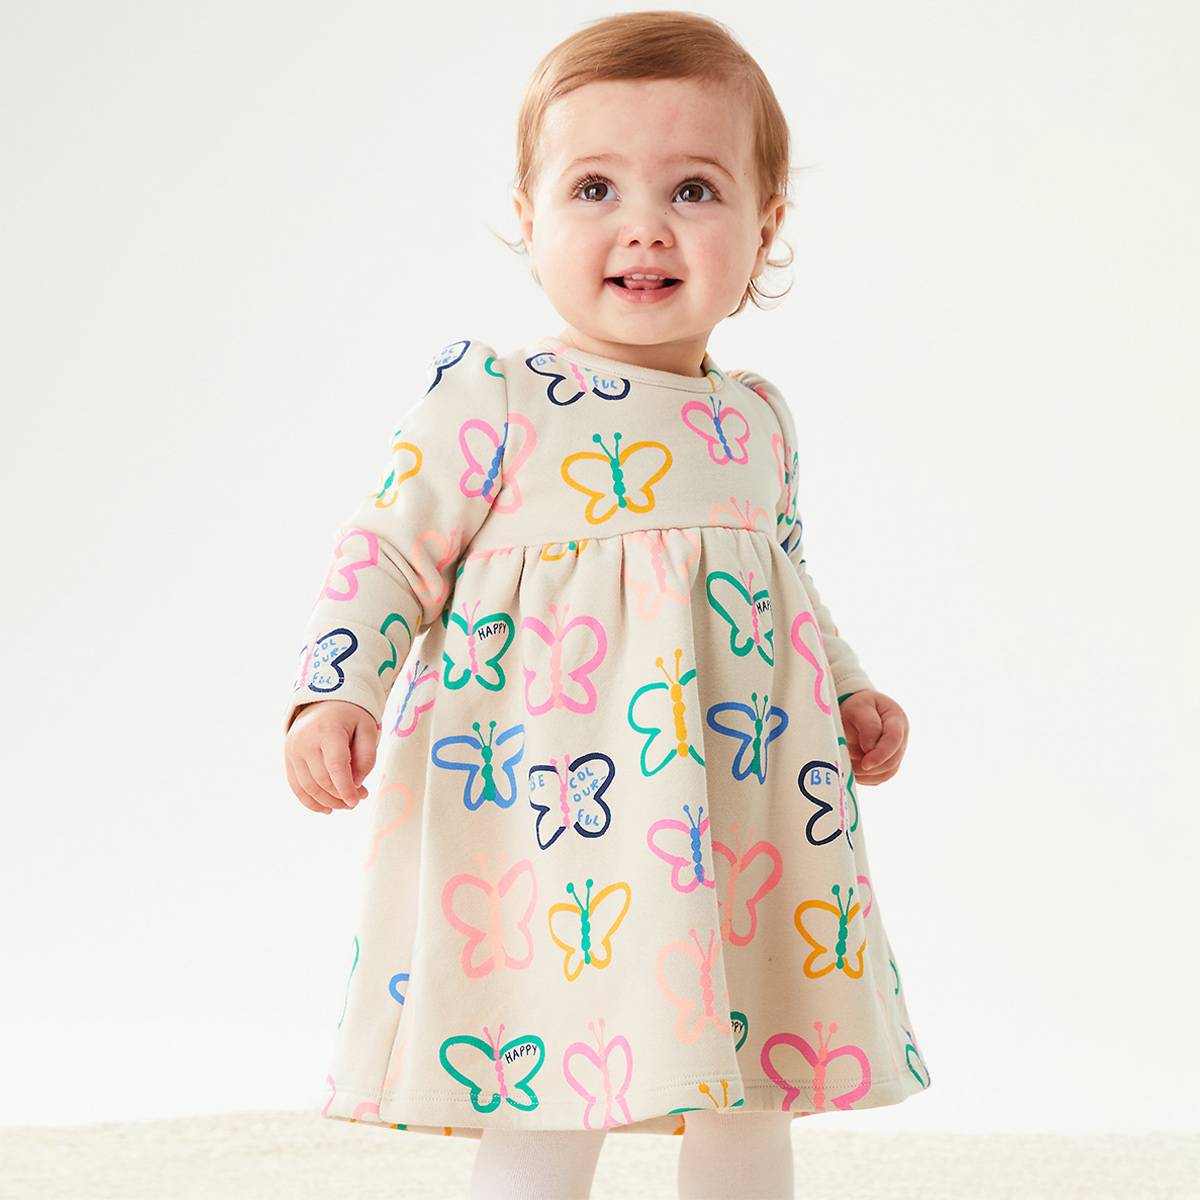 Baby girl wearing butterfly-design dress